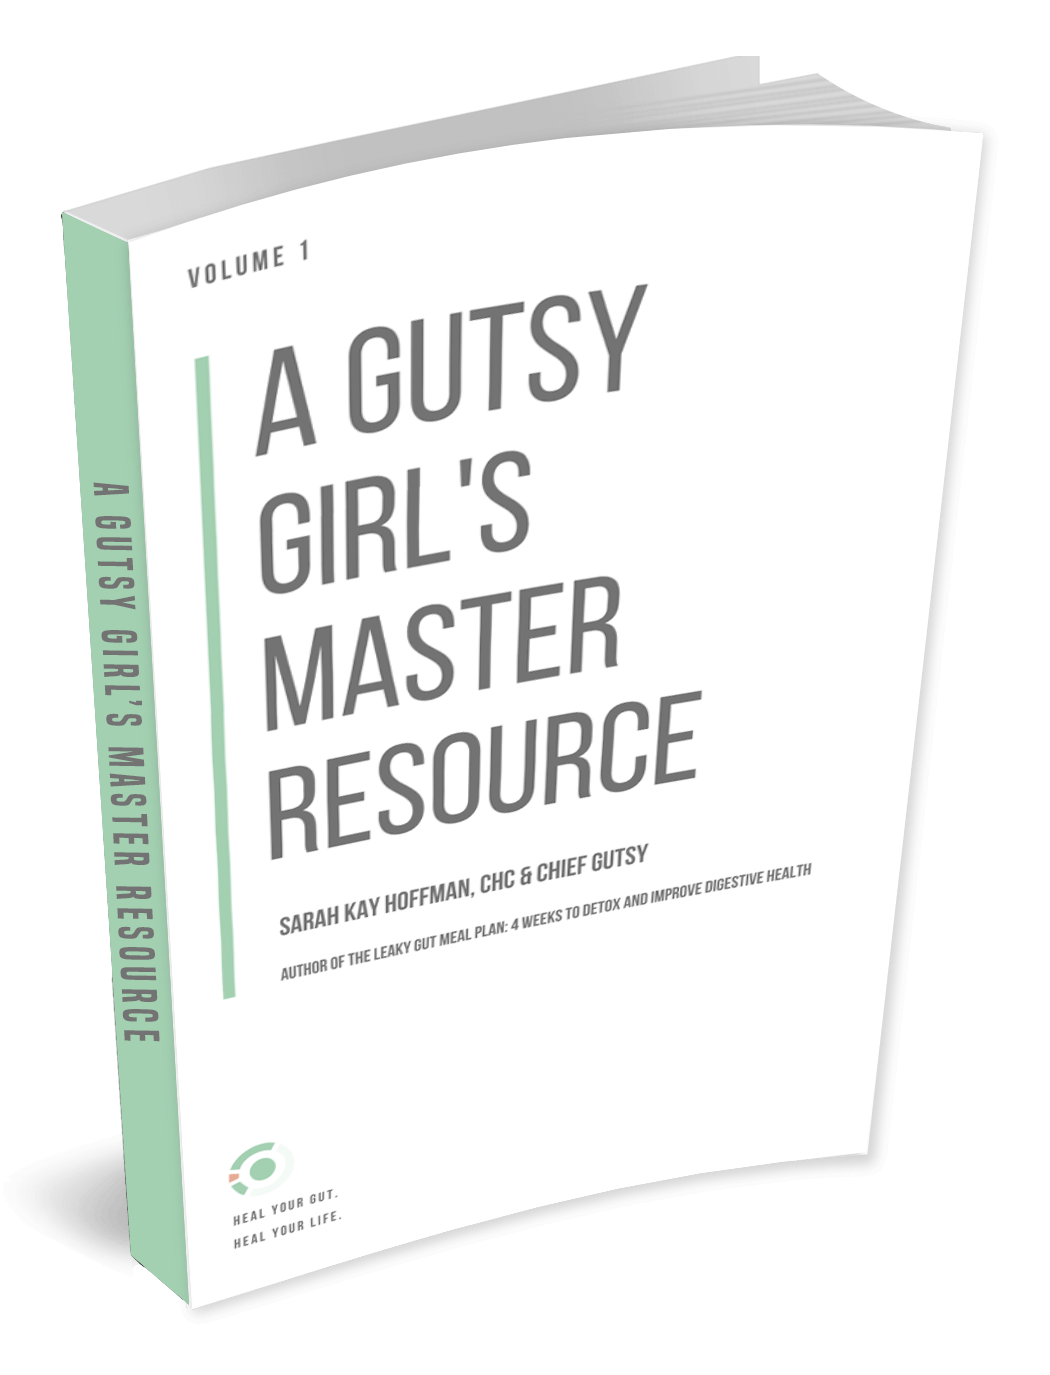 A Gutsy Girl's Master Resource gut health e-book agutsygirl.com